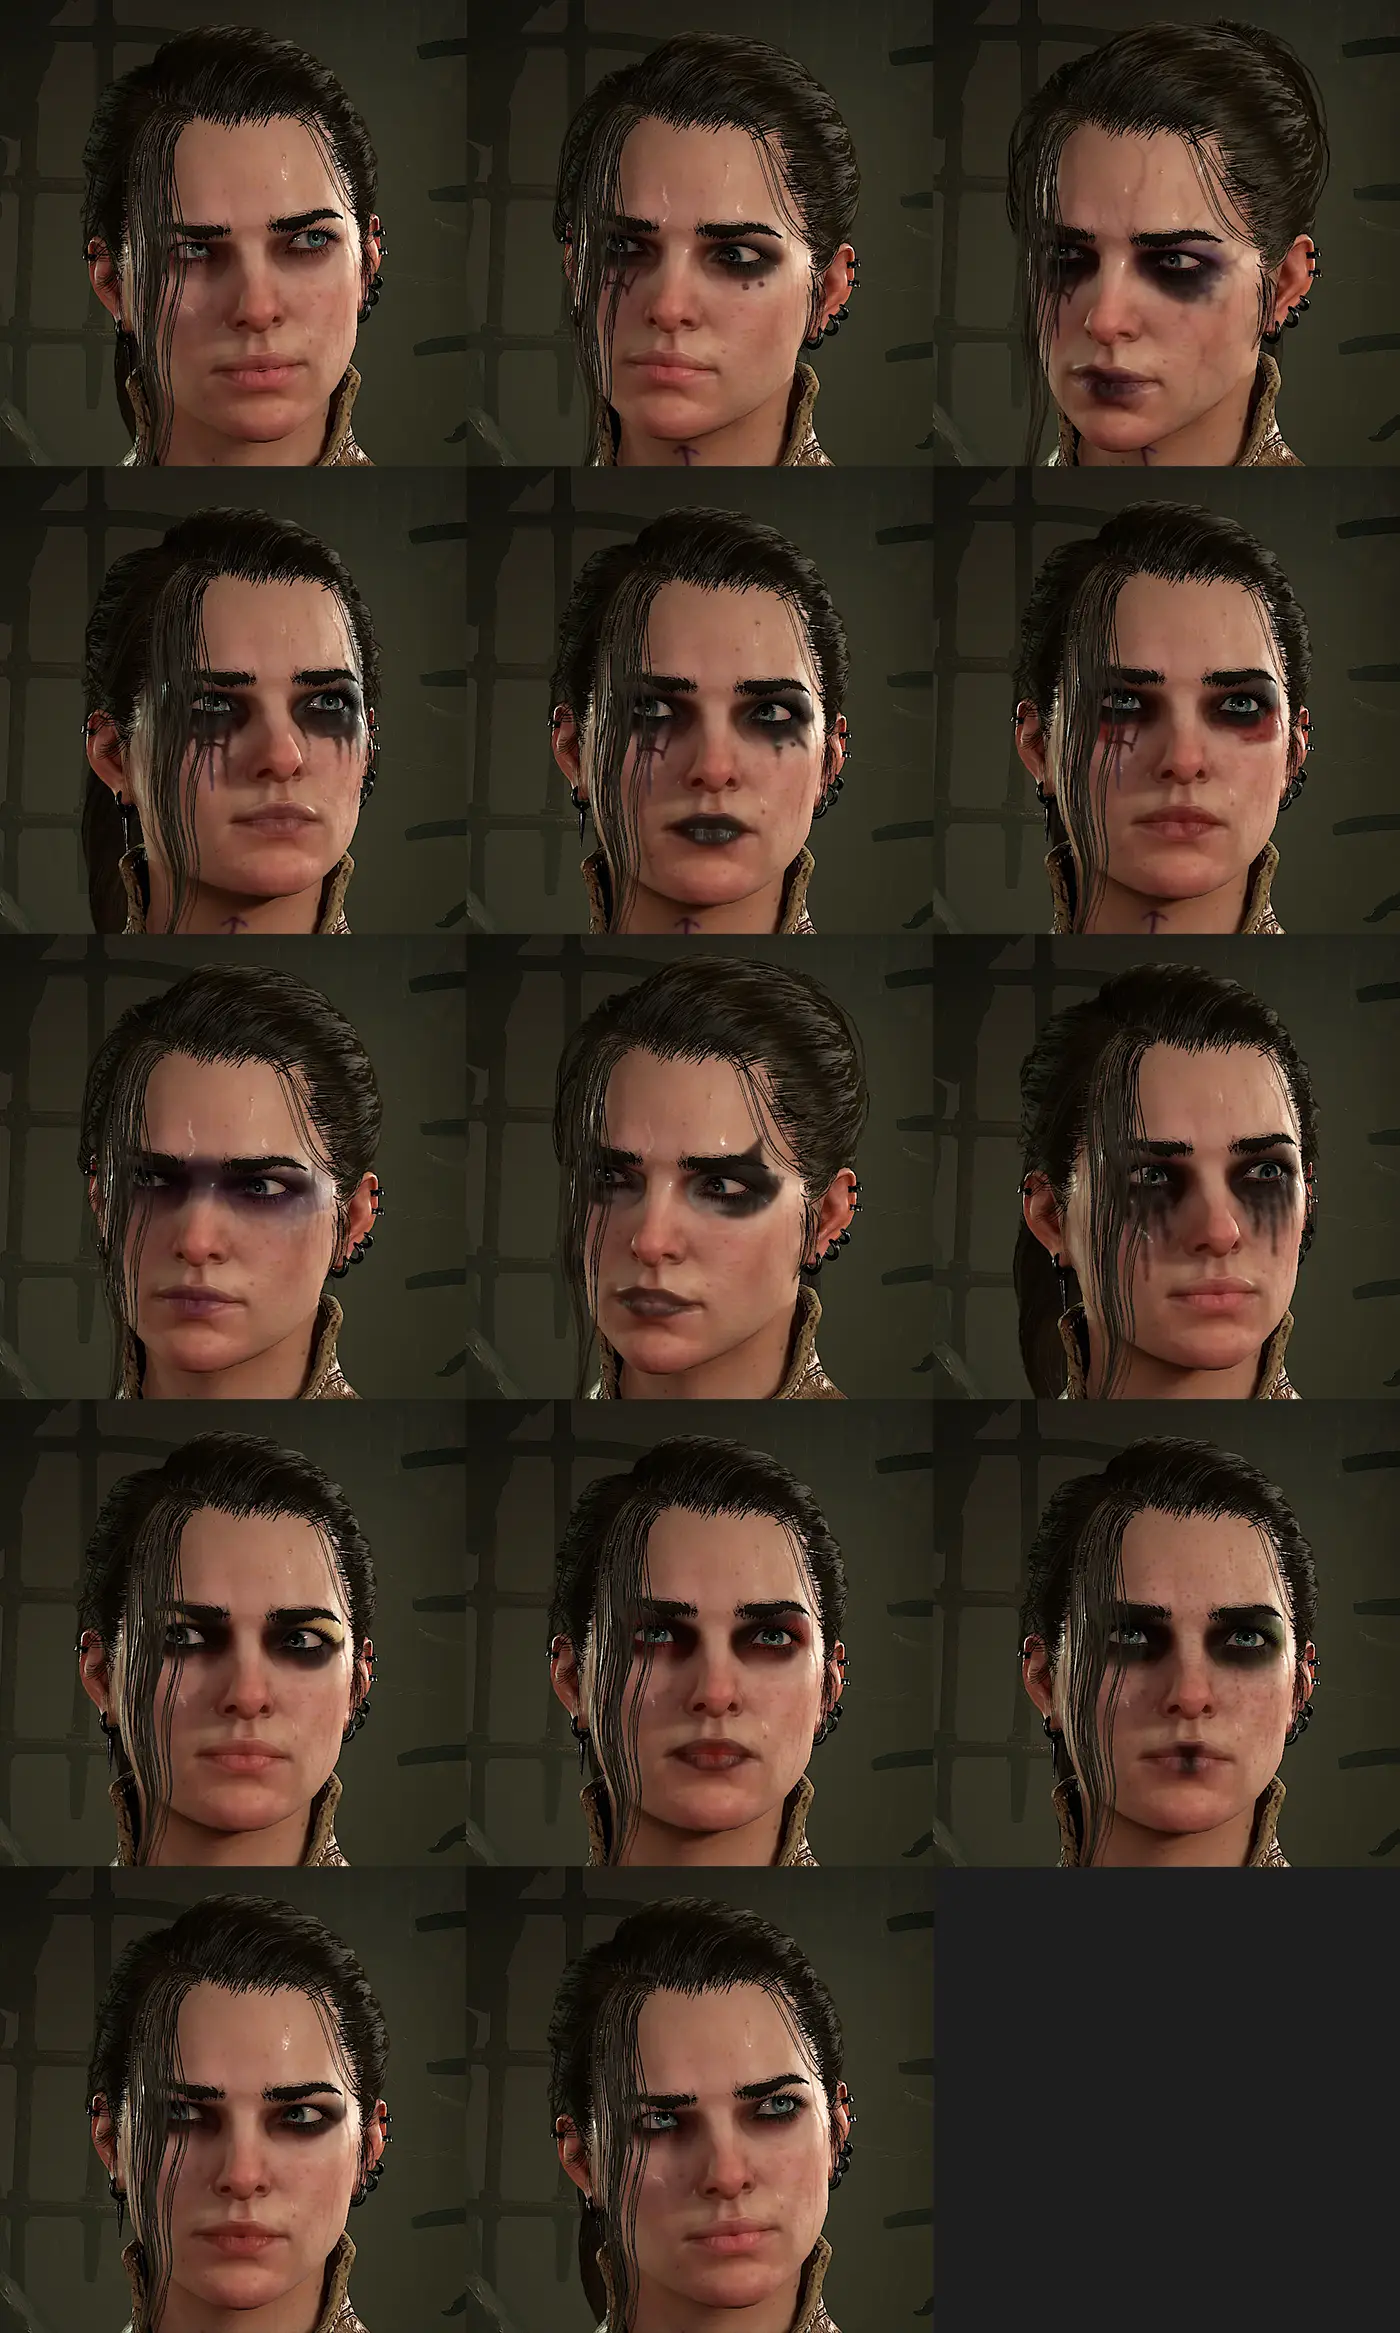 D4 character makeup options